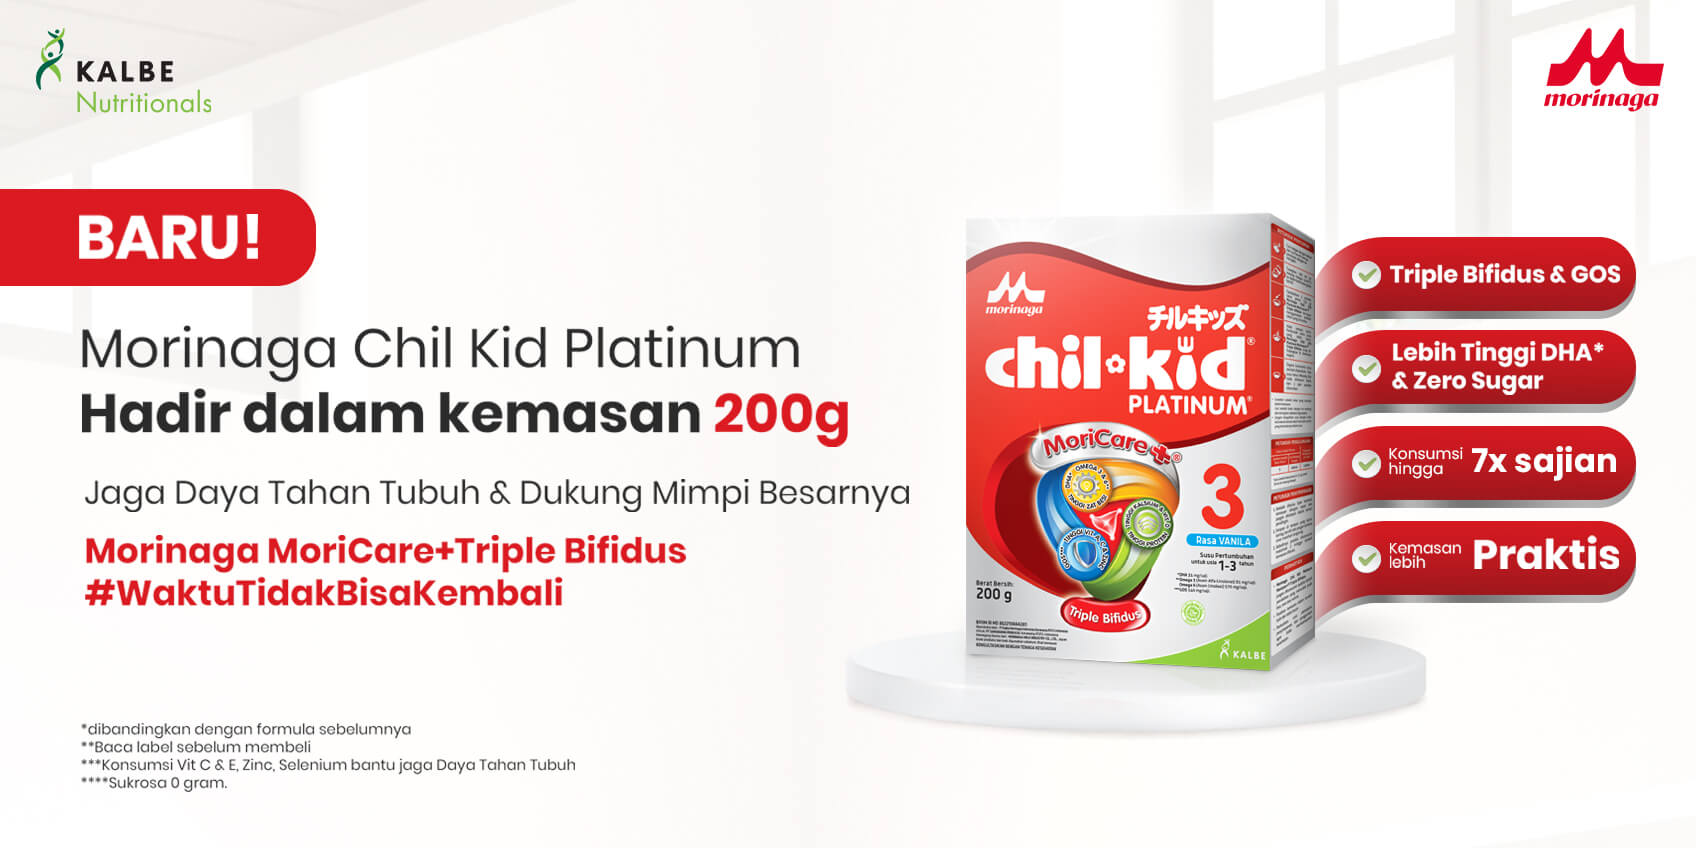 Get a Free Morinaga Chil Kid Platinum 200g Product